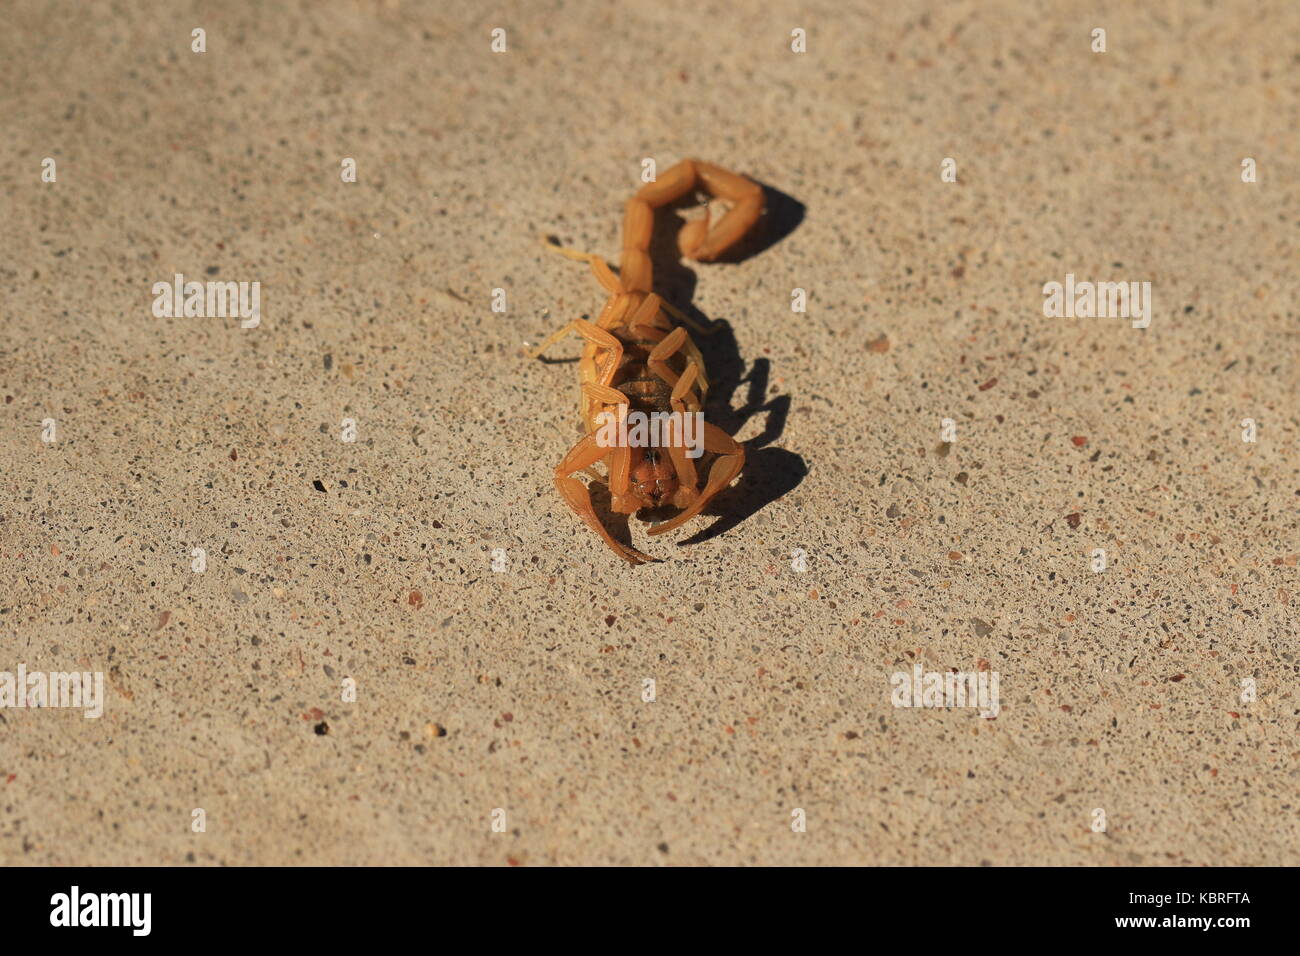 Arizona Bark scorpion Stock Photo